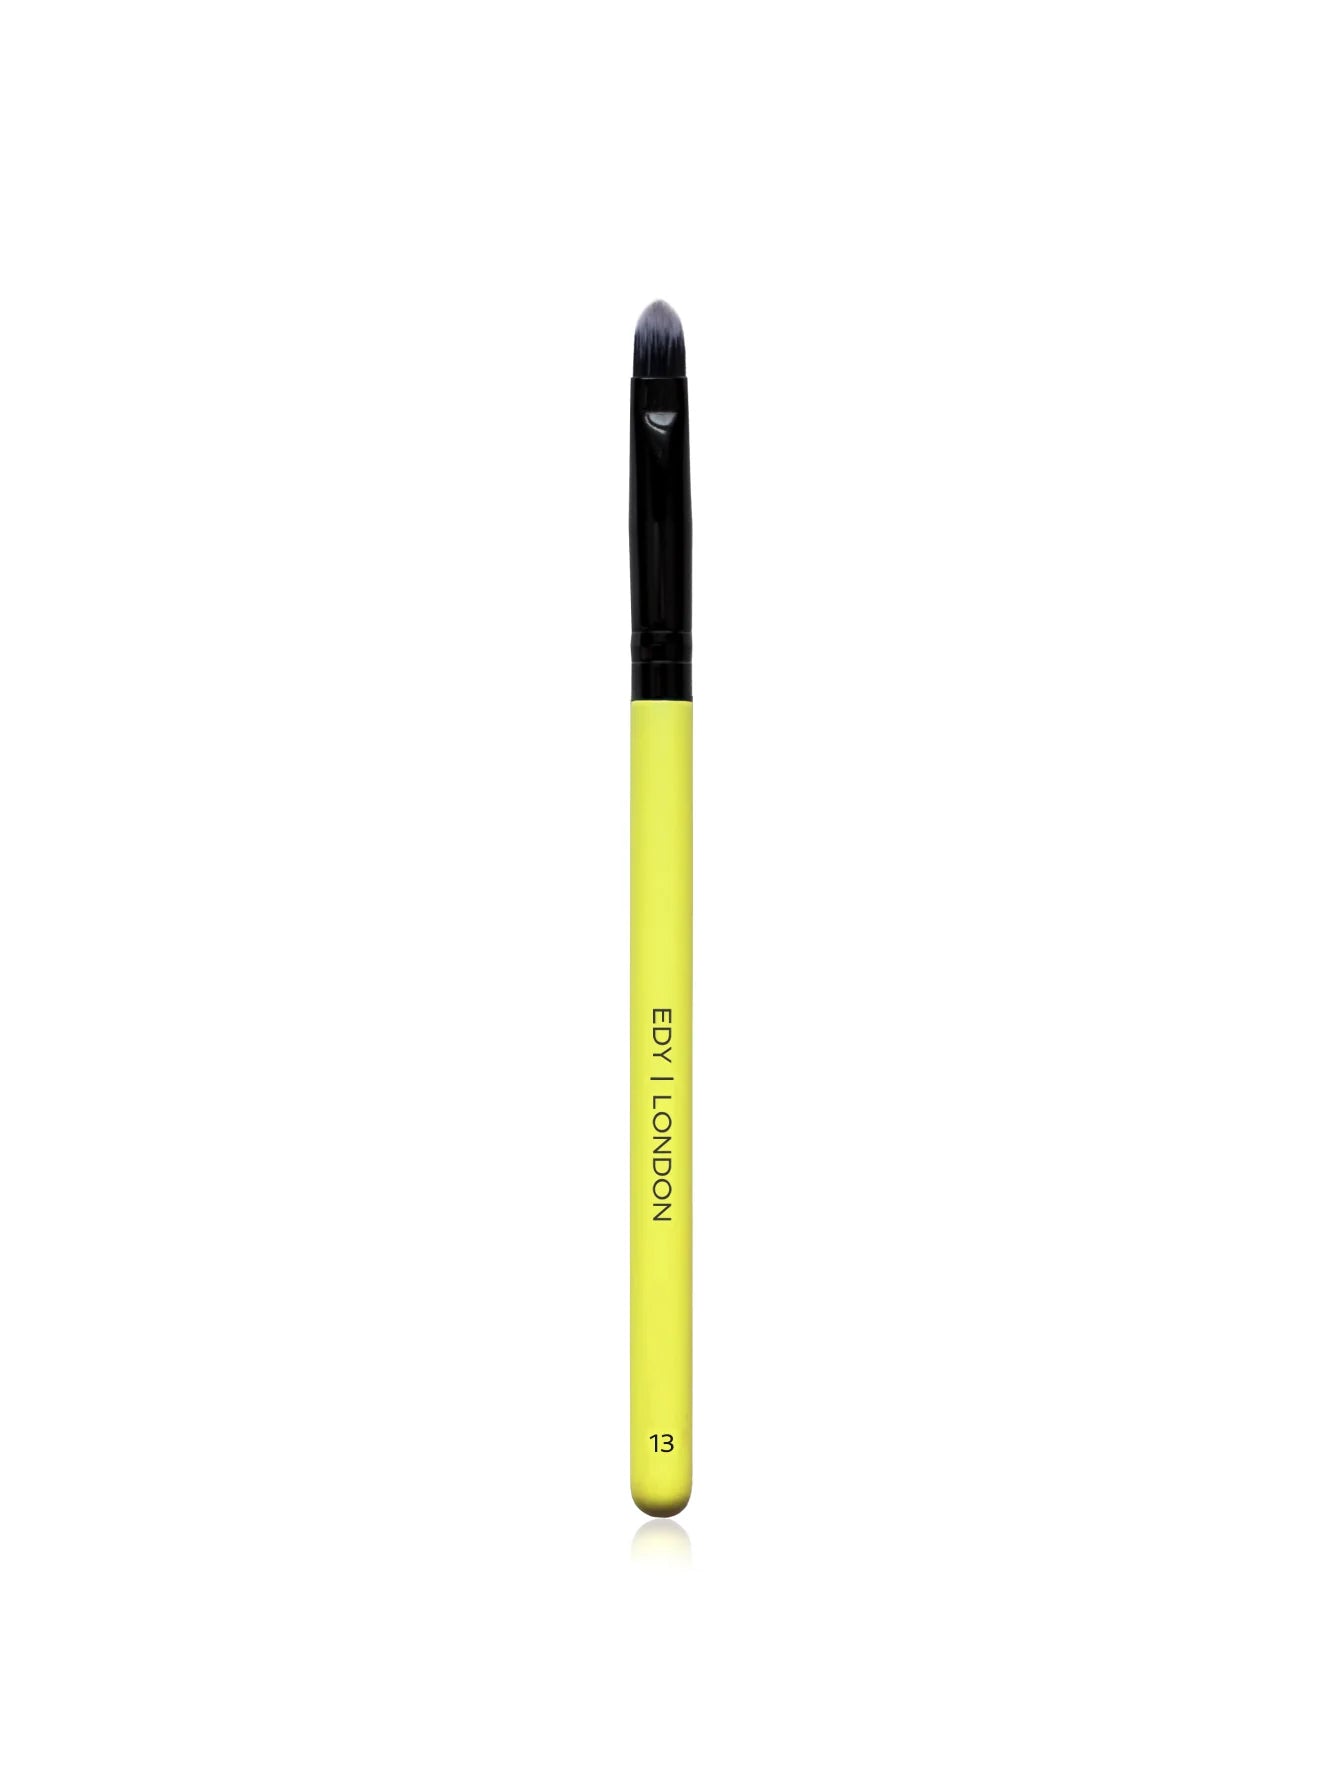 Precision Pencil / Shader Brush 13 Make-up Brush EDY LONDON Lemon   - EDY LONDON PRODUCTS UK - The Best Makeup Brushes - shop.edy.london